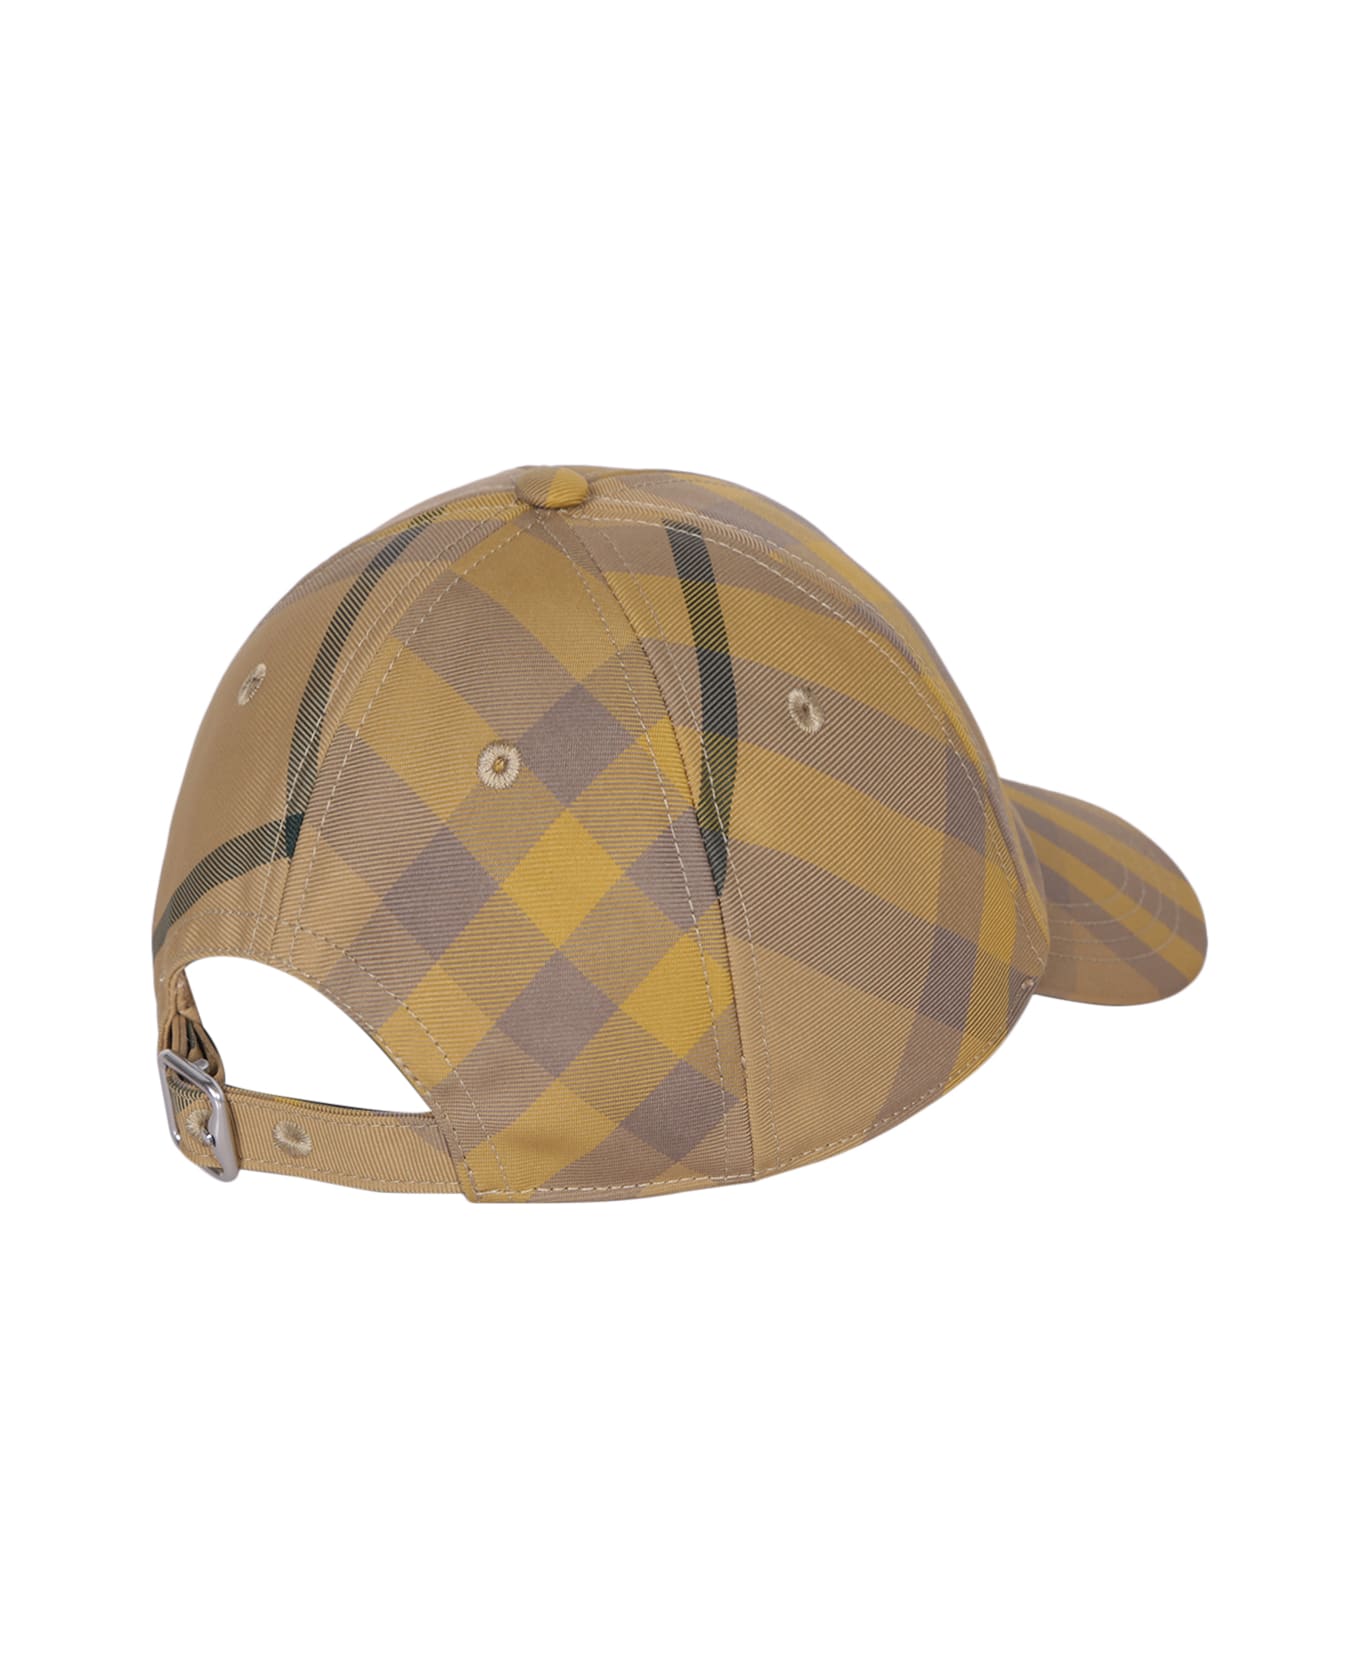 Burberry Check Cap - Yellow 帽子